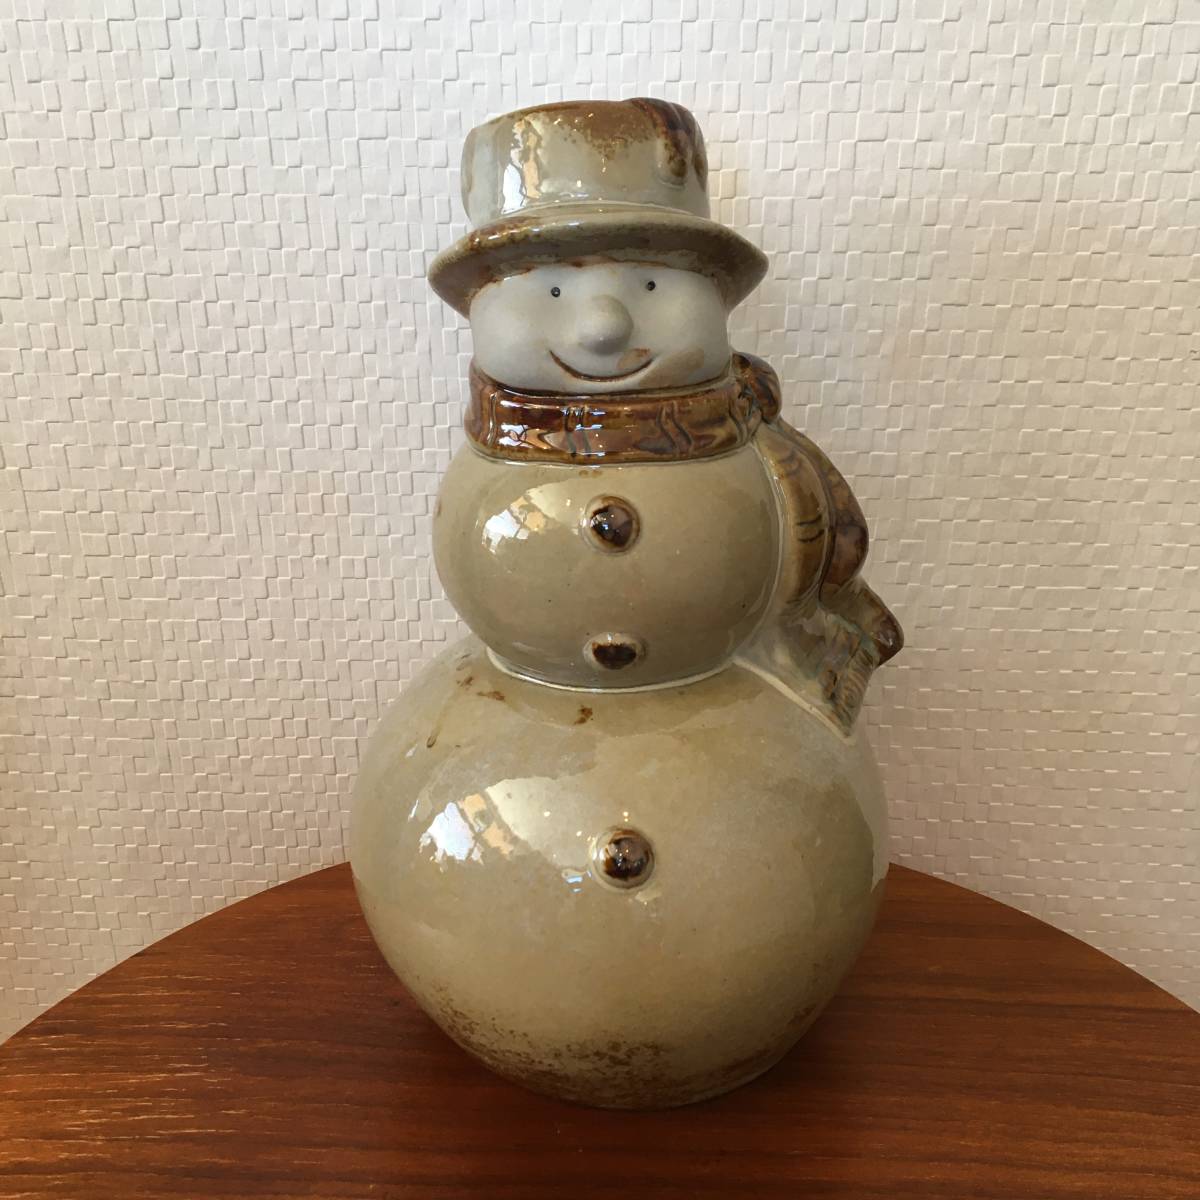 Snowman, Handmade, Ceramic, Figurine, Handmade items, interior, miscellaneous goods, ornament, object